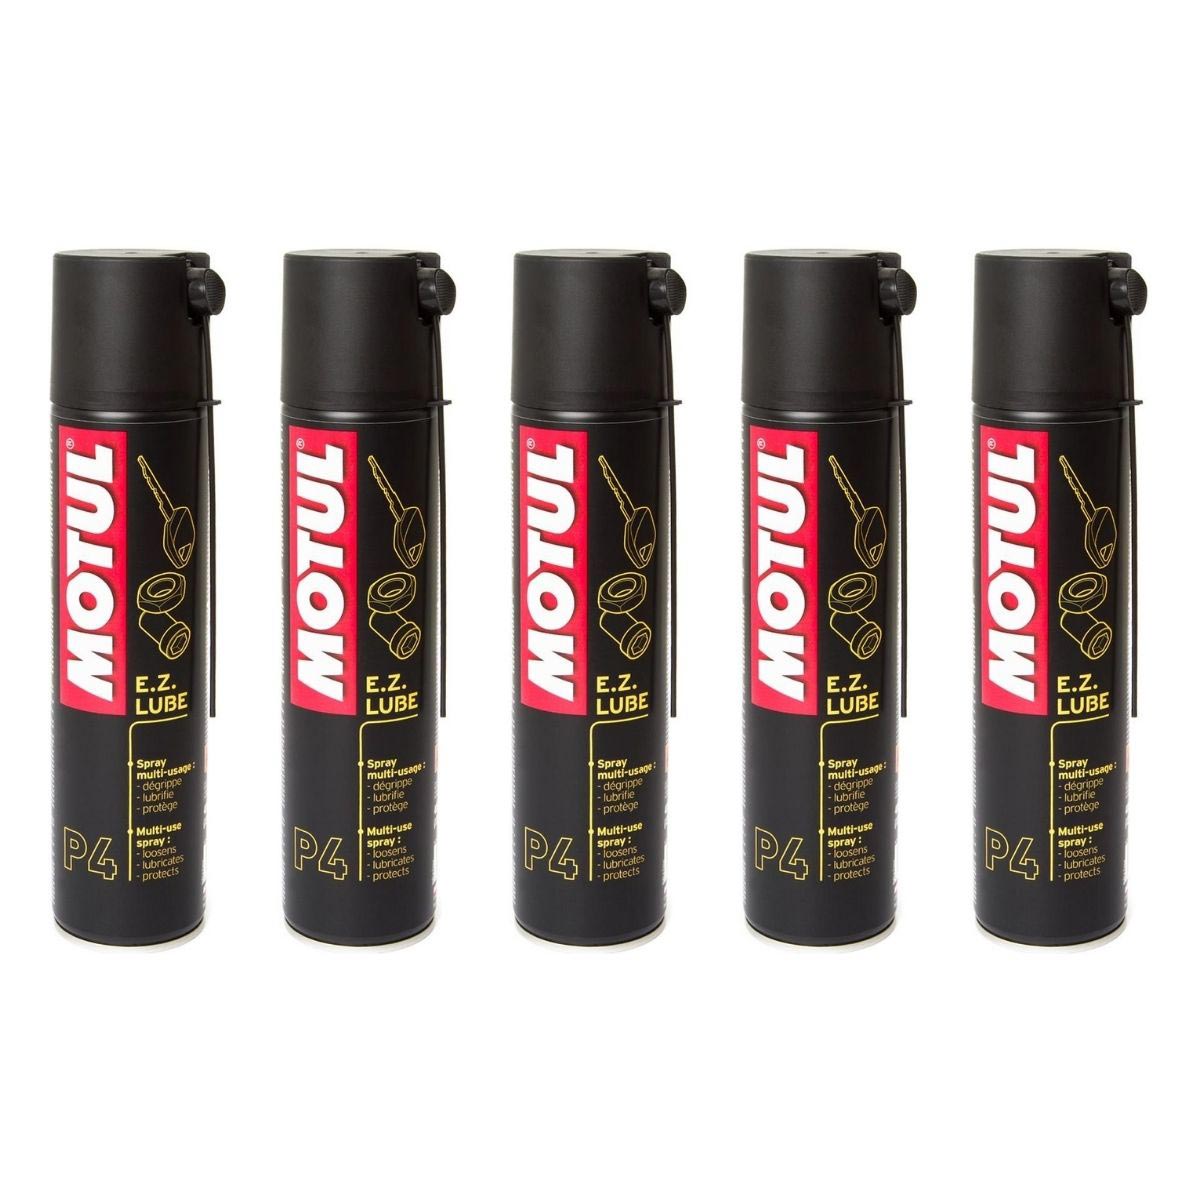 Motul Spray Multi-usage P4 E.Z. Lube Set: 5 pièces, 400 ml chacun